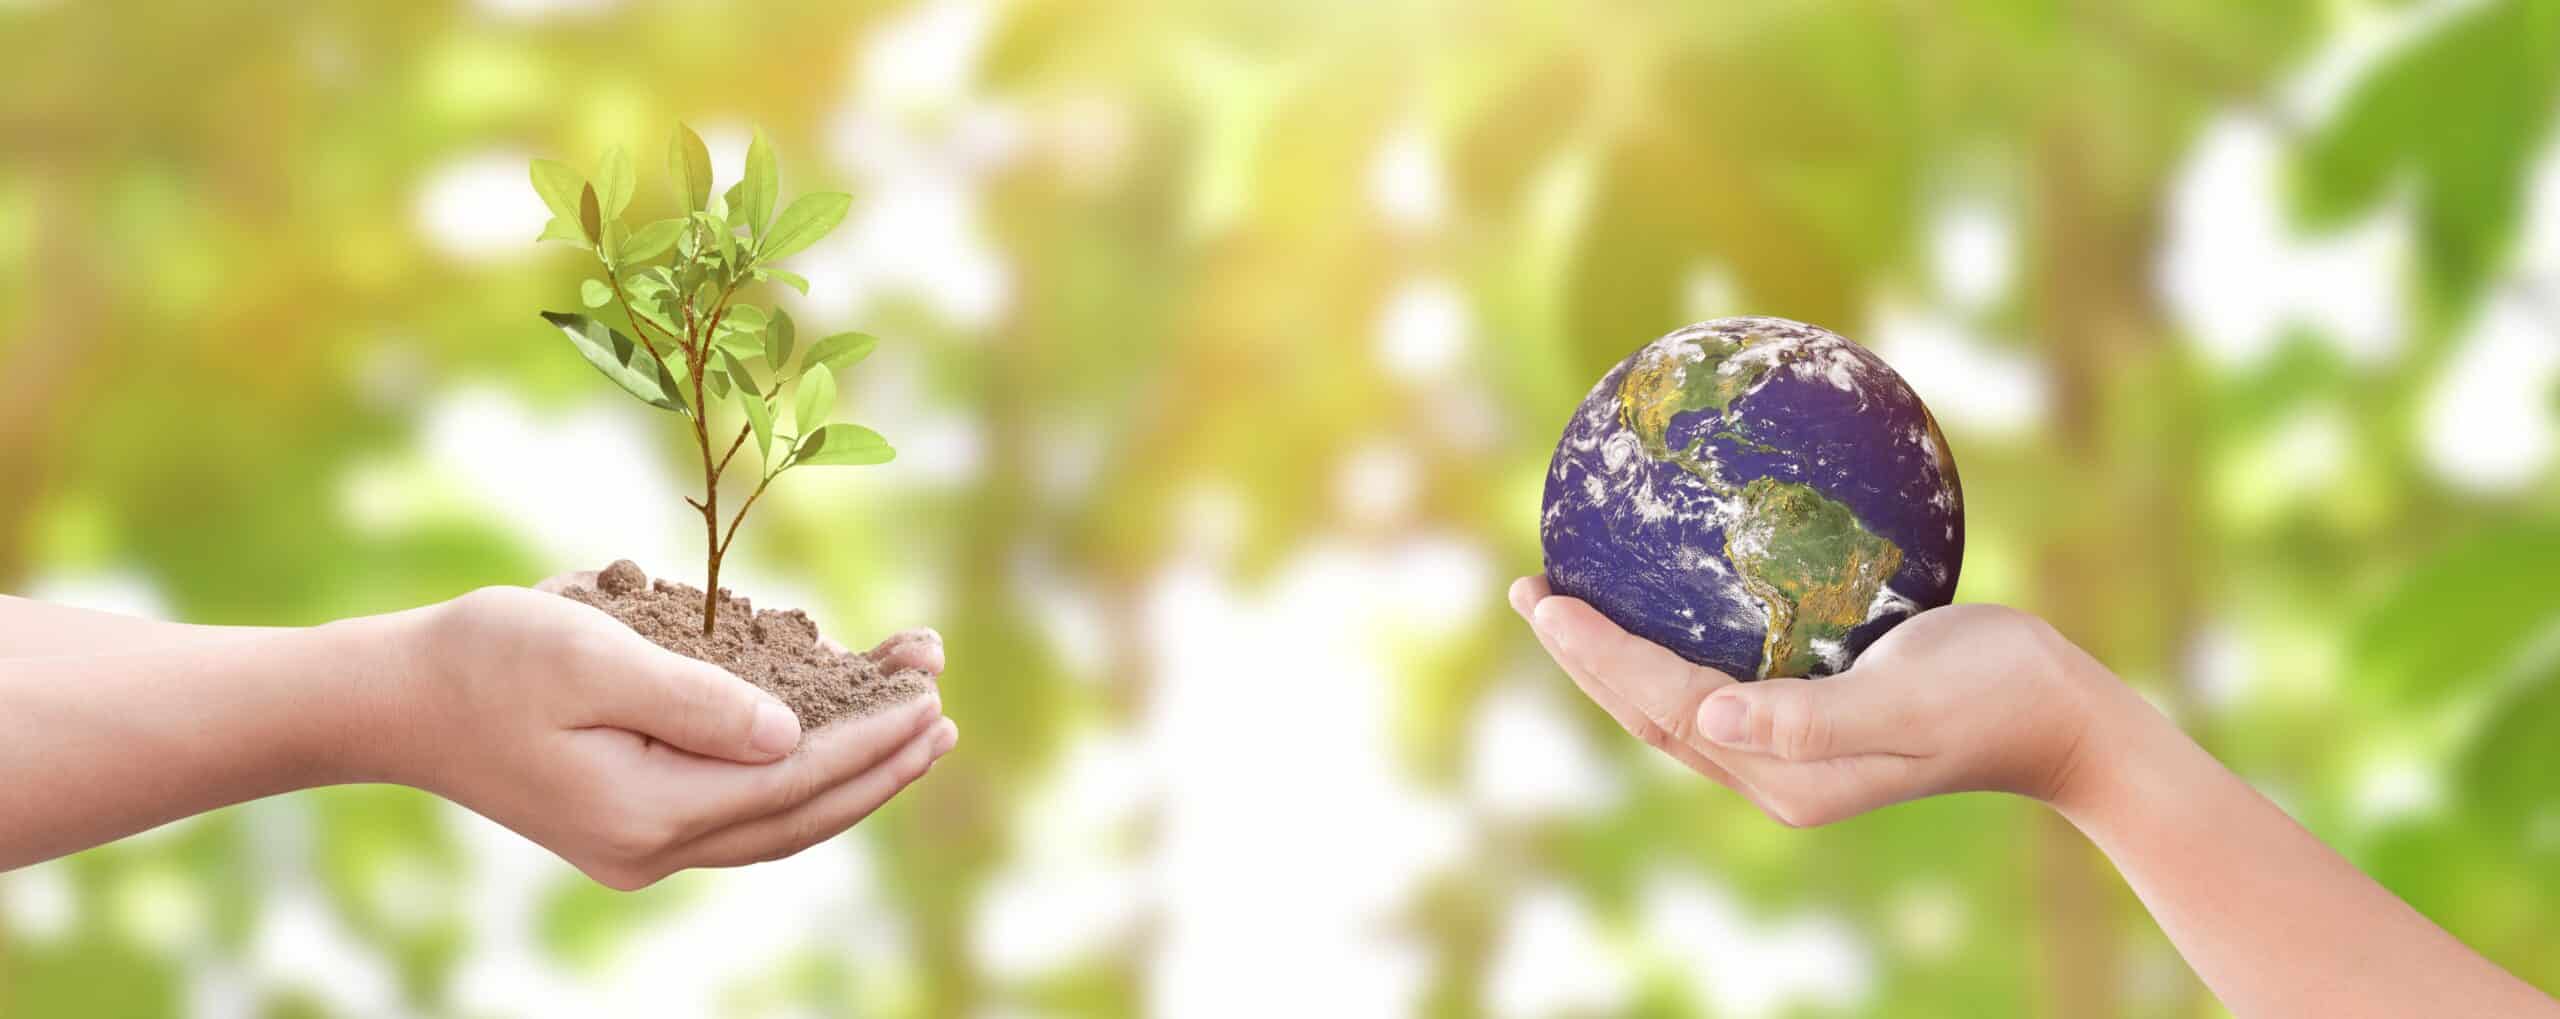 environment-day-concept-child-hands-holding-tree-2022-11-16-18-04-02-utc-min